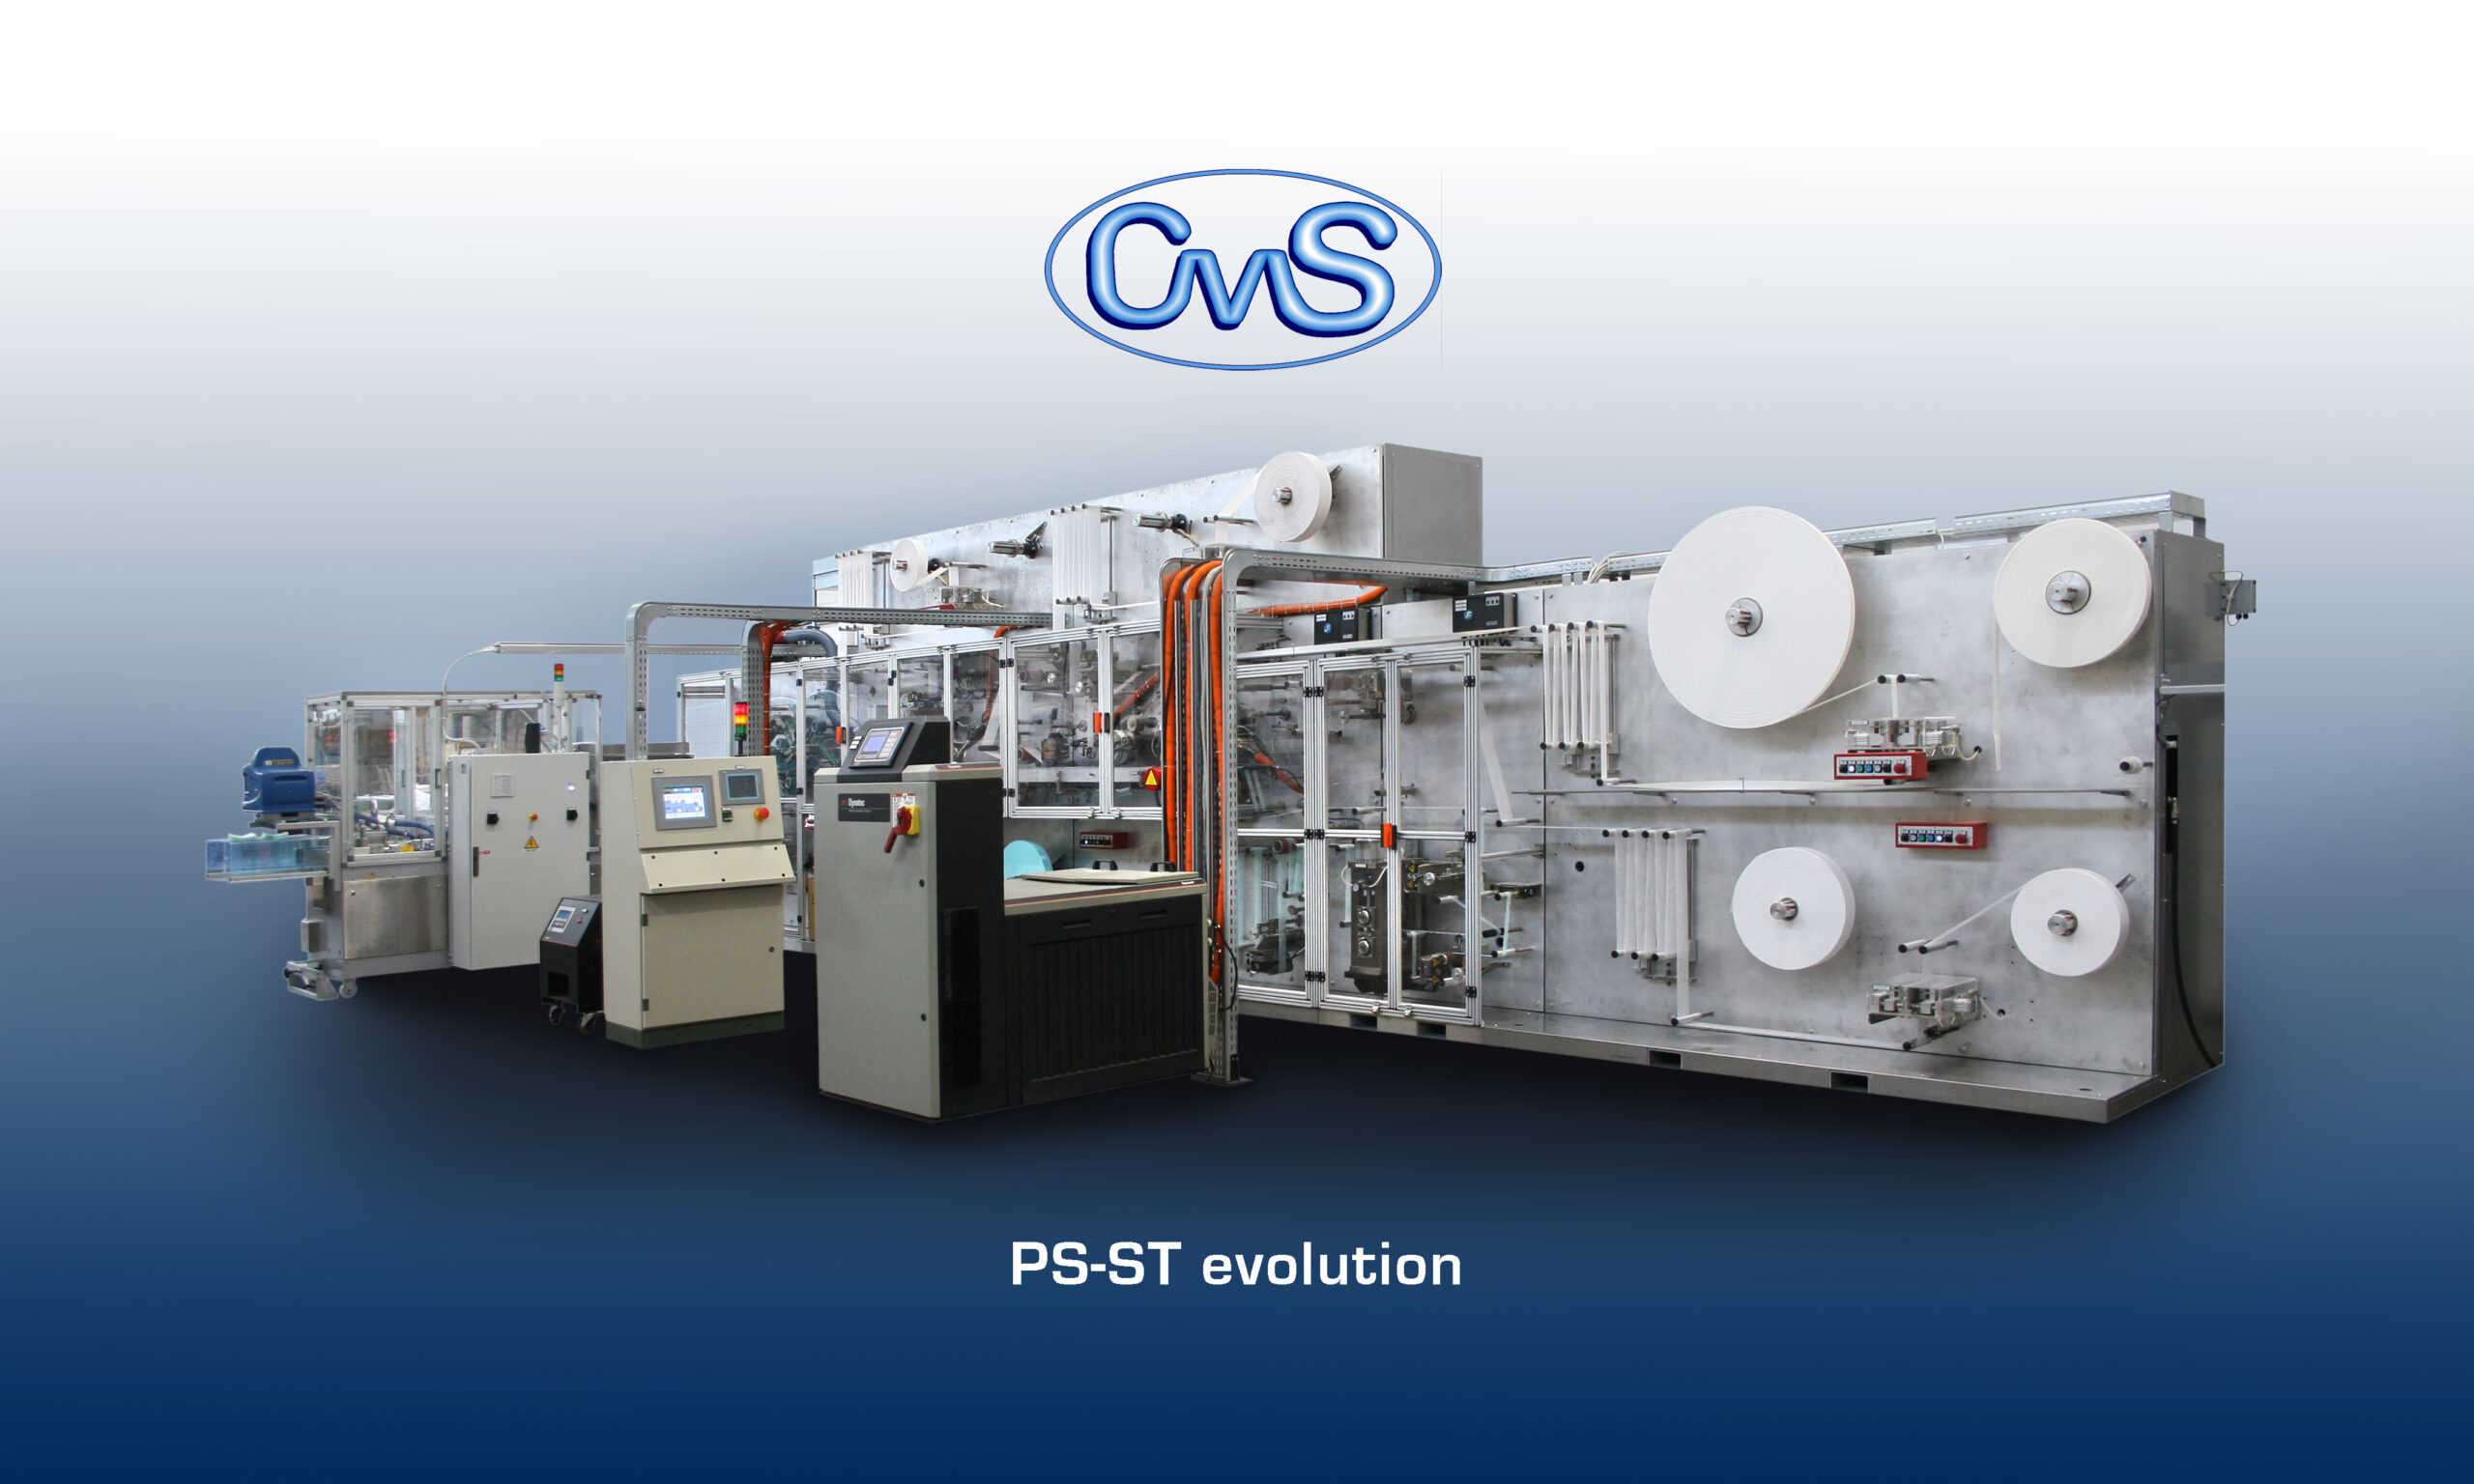 Cms Srl - Ps - ST - Evolution macchina produzione e confezionamento prodotti igenico sanitari femminili